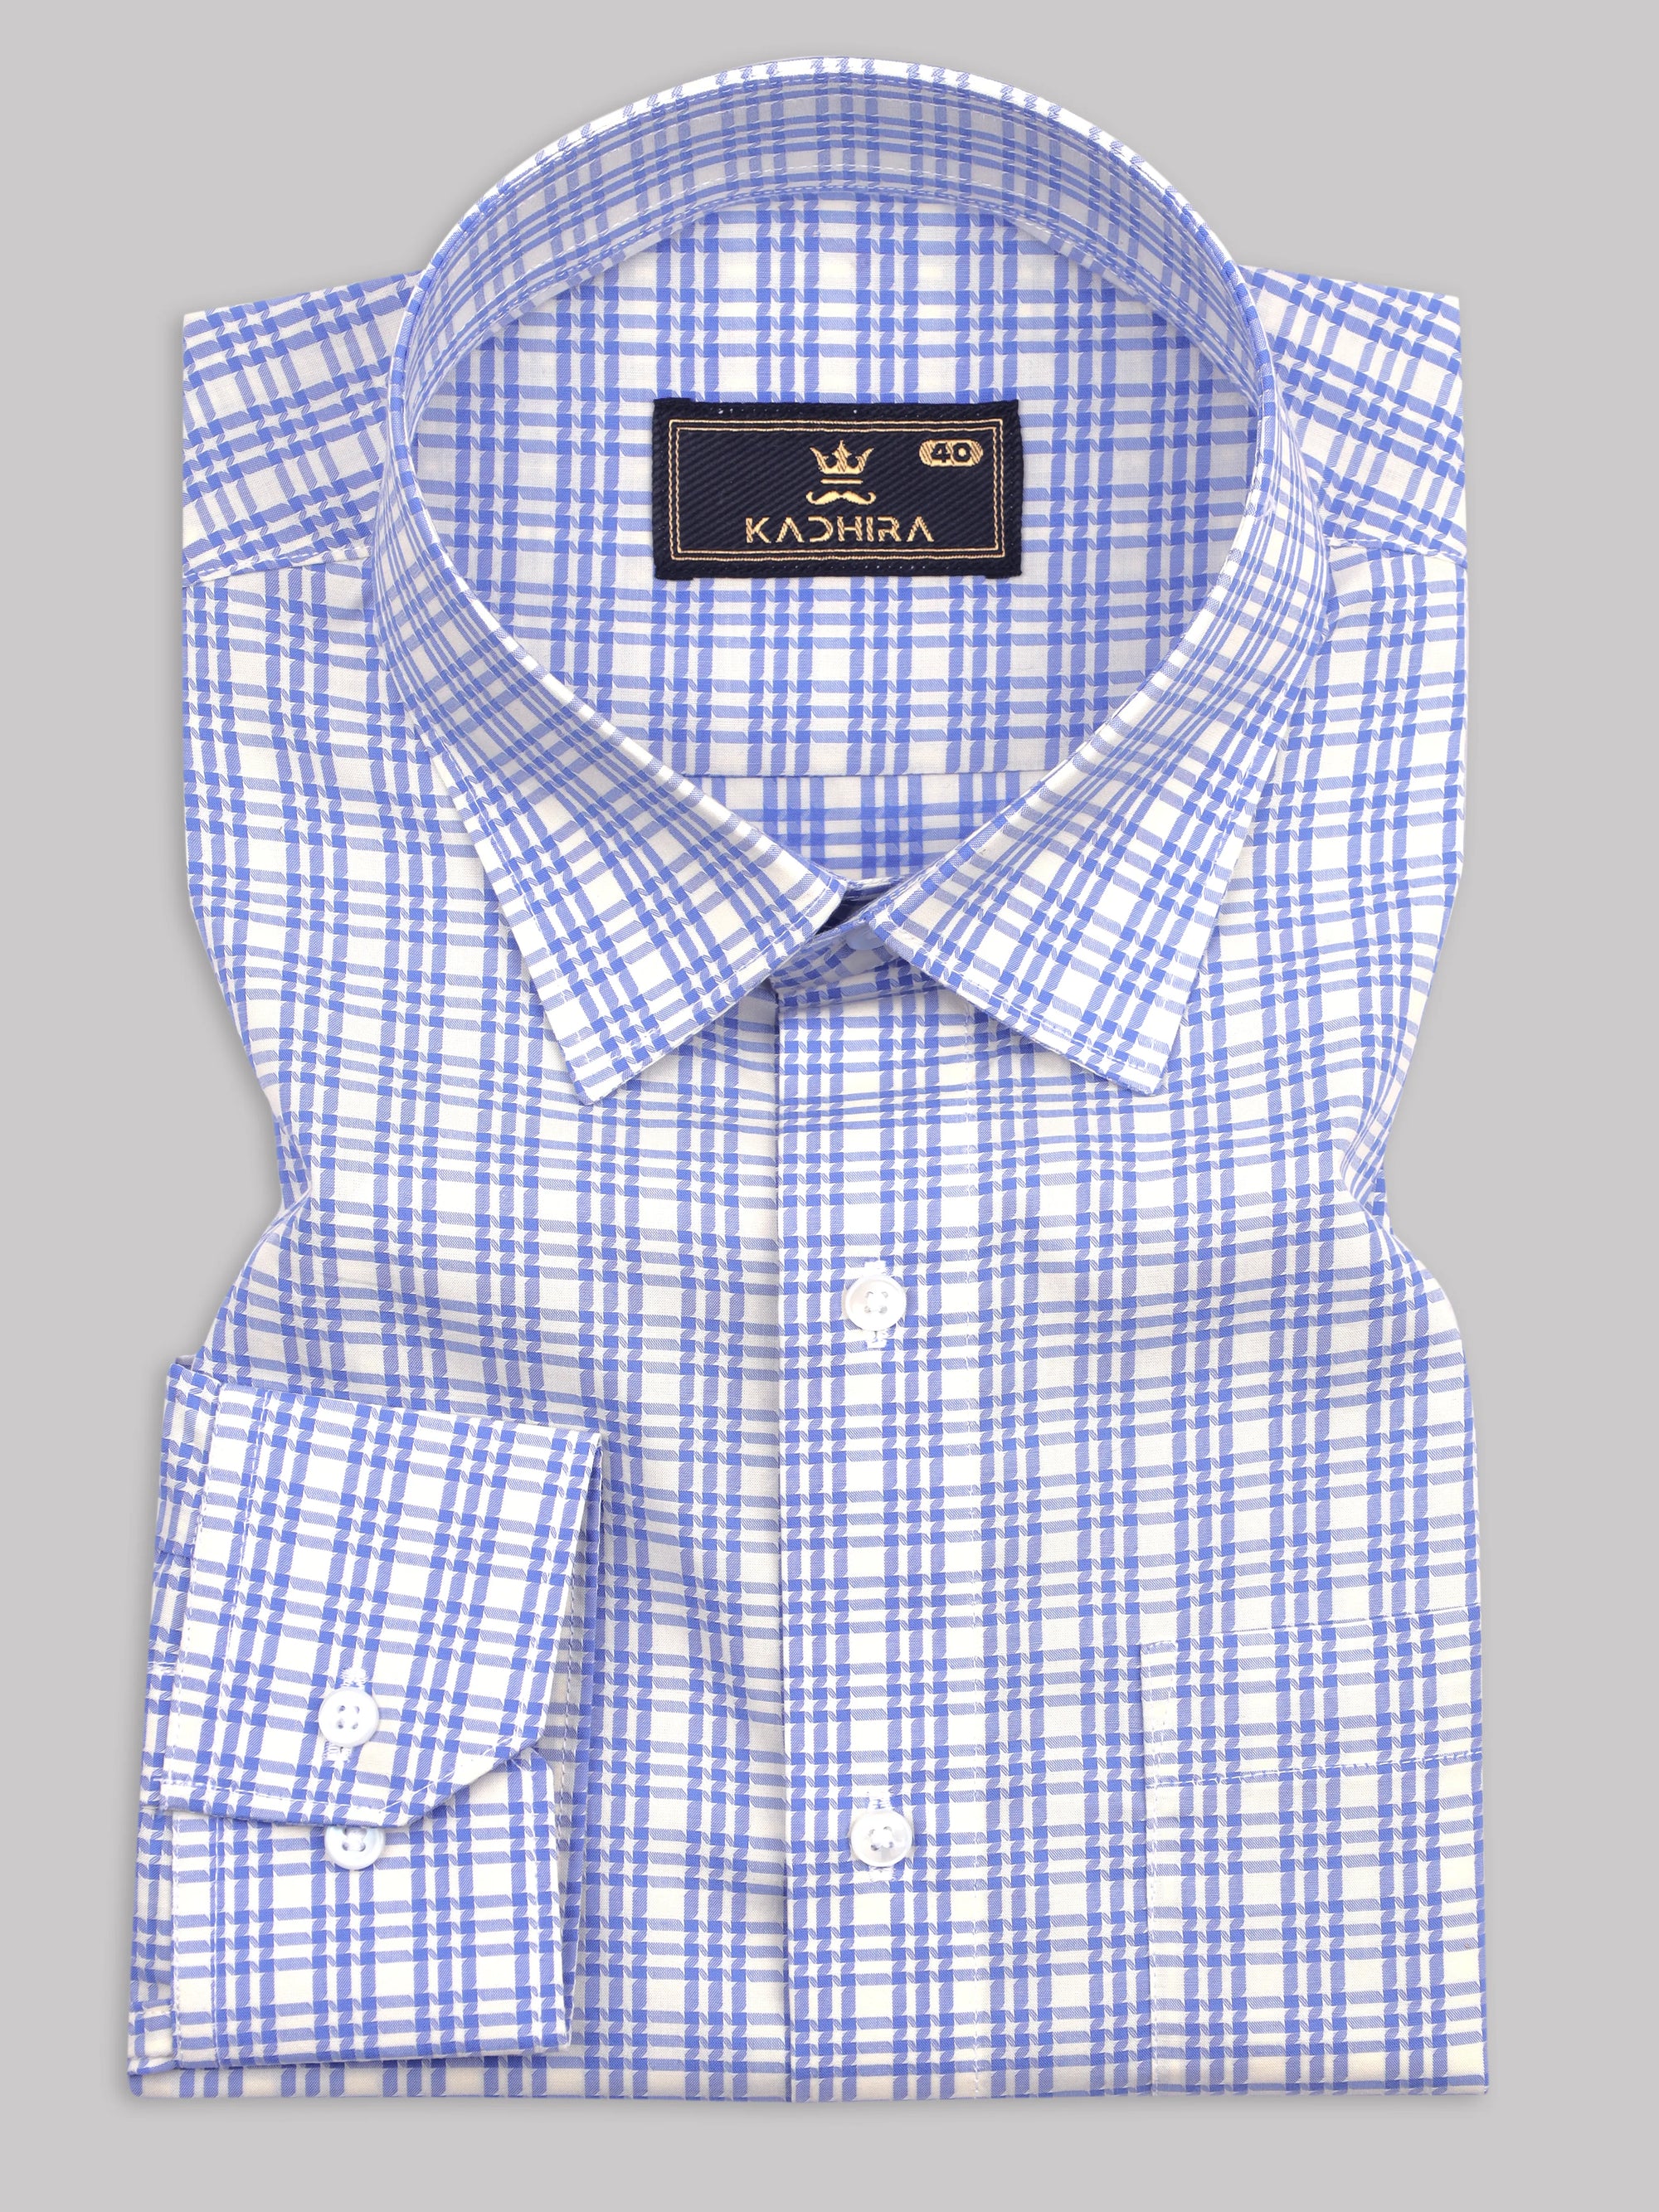 White And Blue Checkered Premium Cotton Shirt